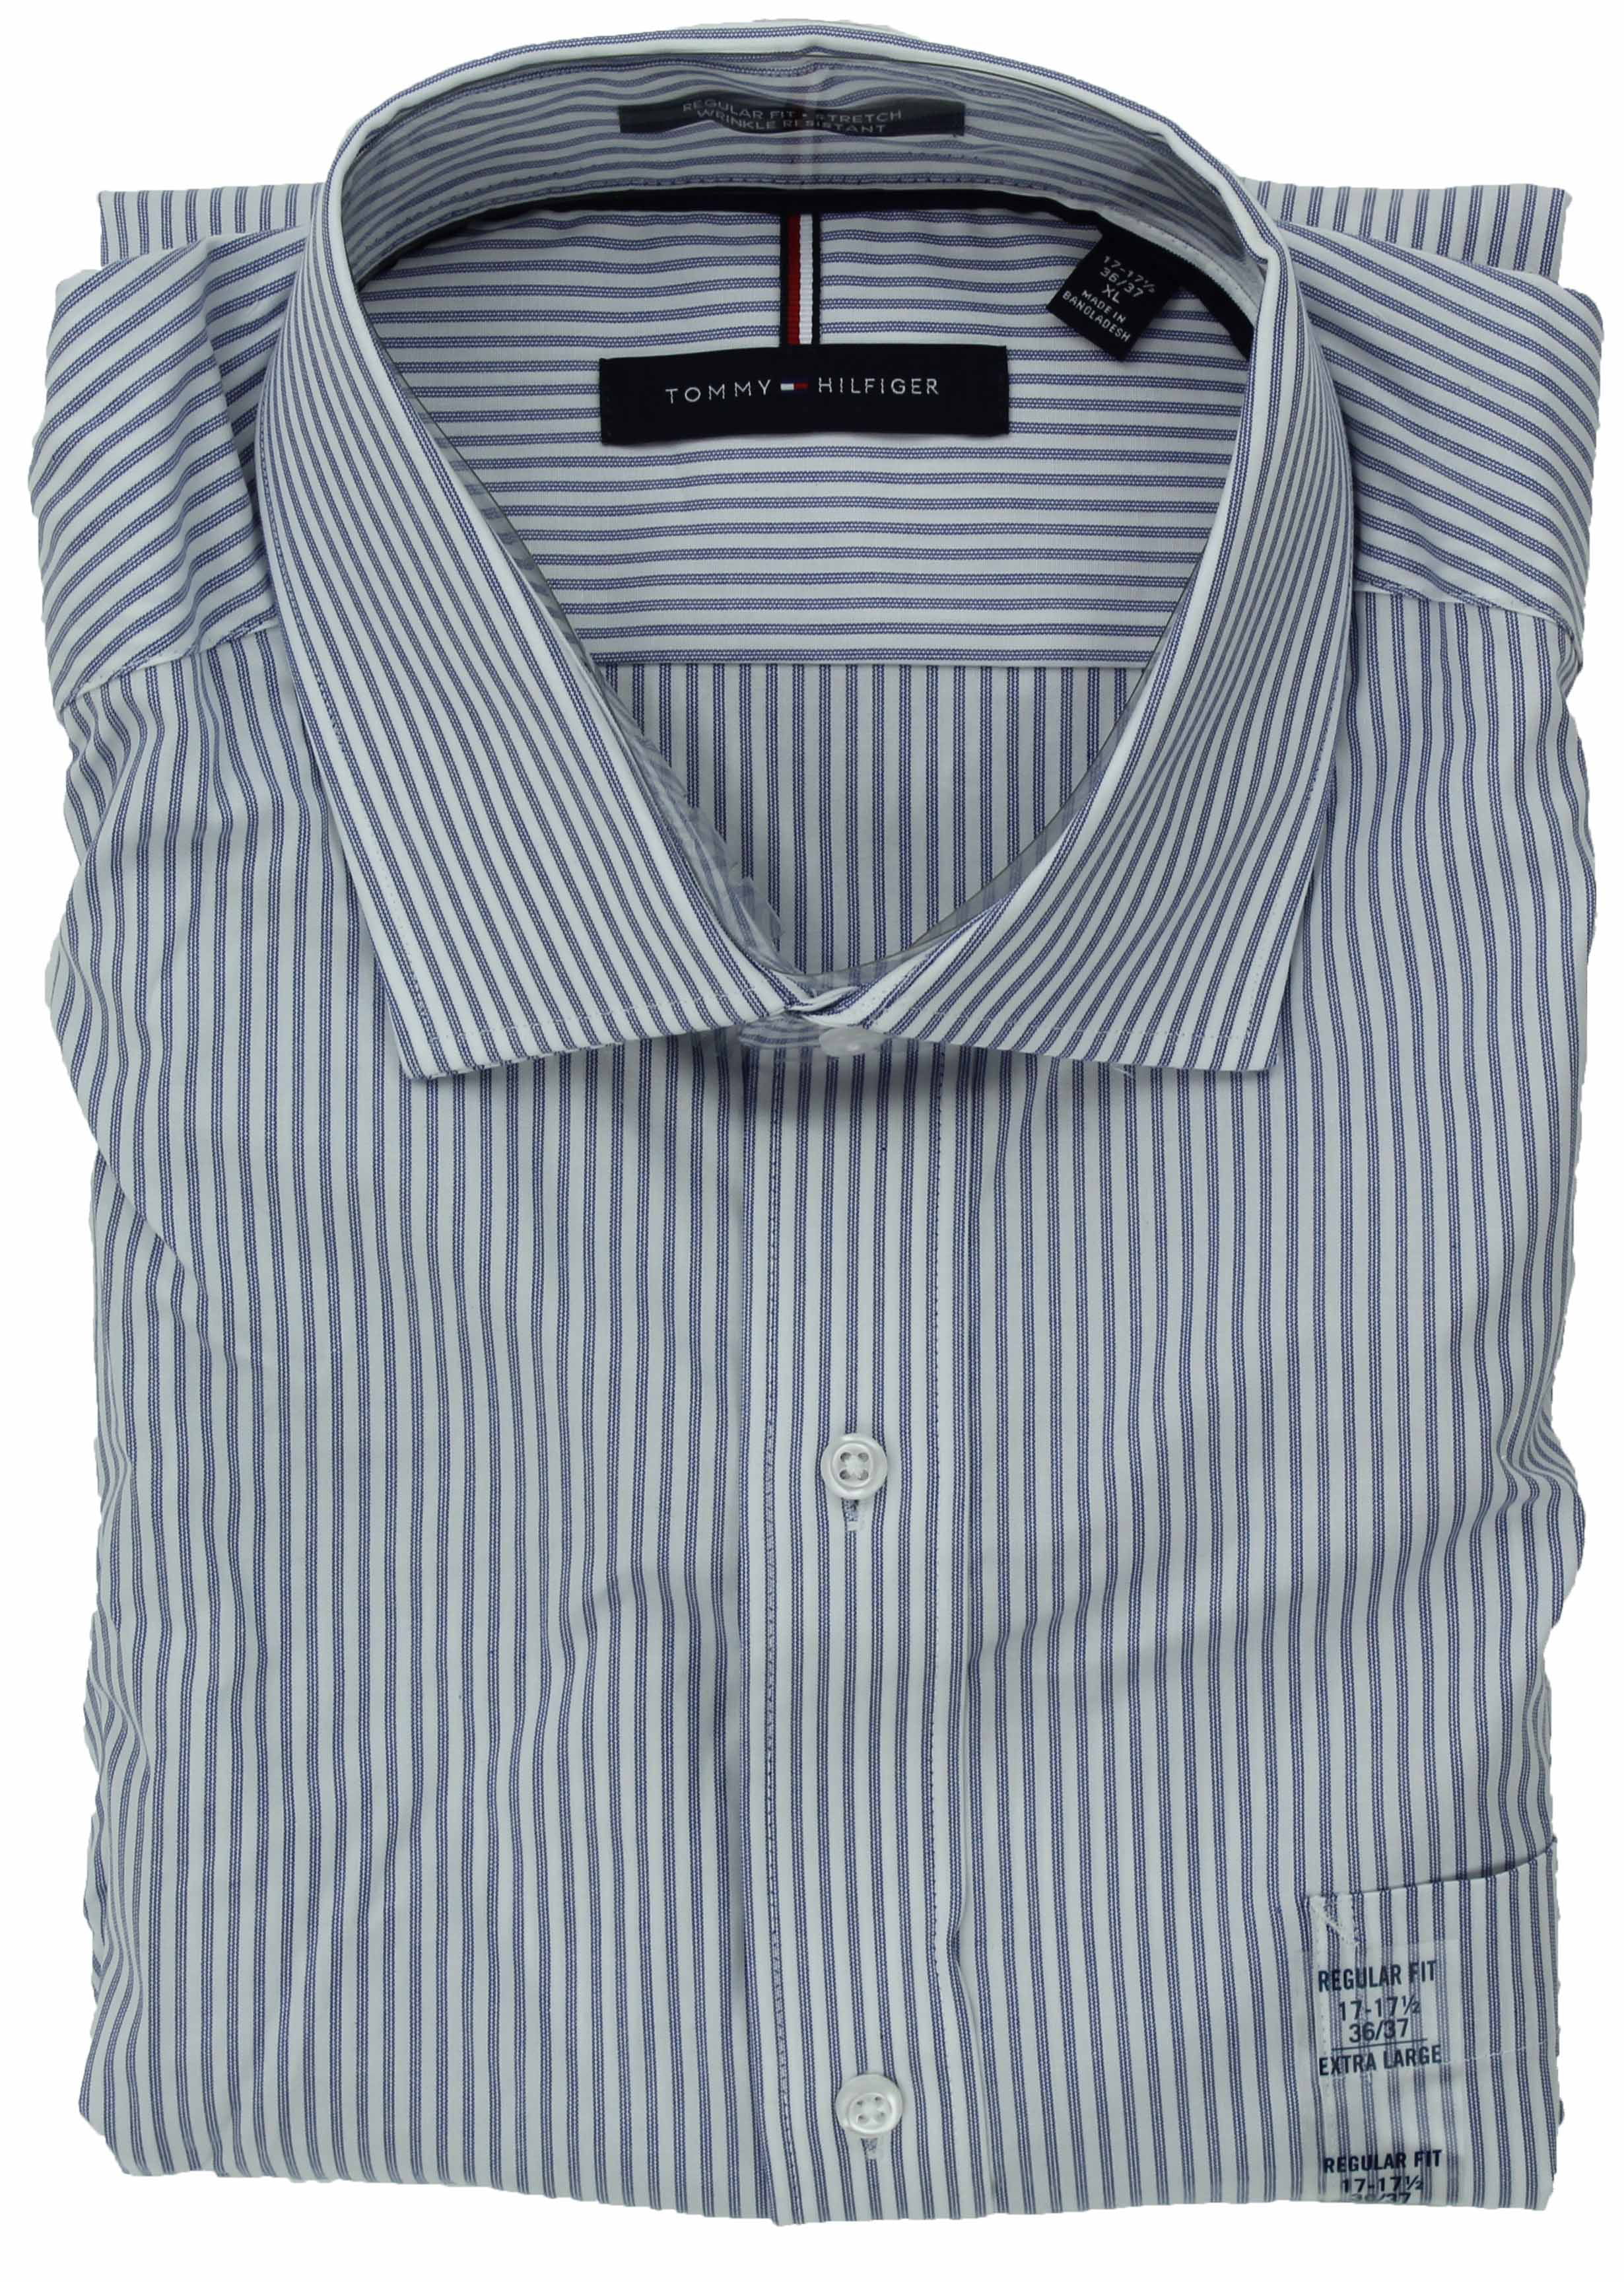 $74.50 NWT Tommy Hilfiger Mens Size 17 1/2 35-36 Blue White Striped L/S Shirt 